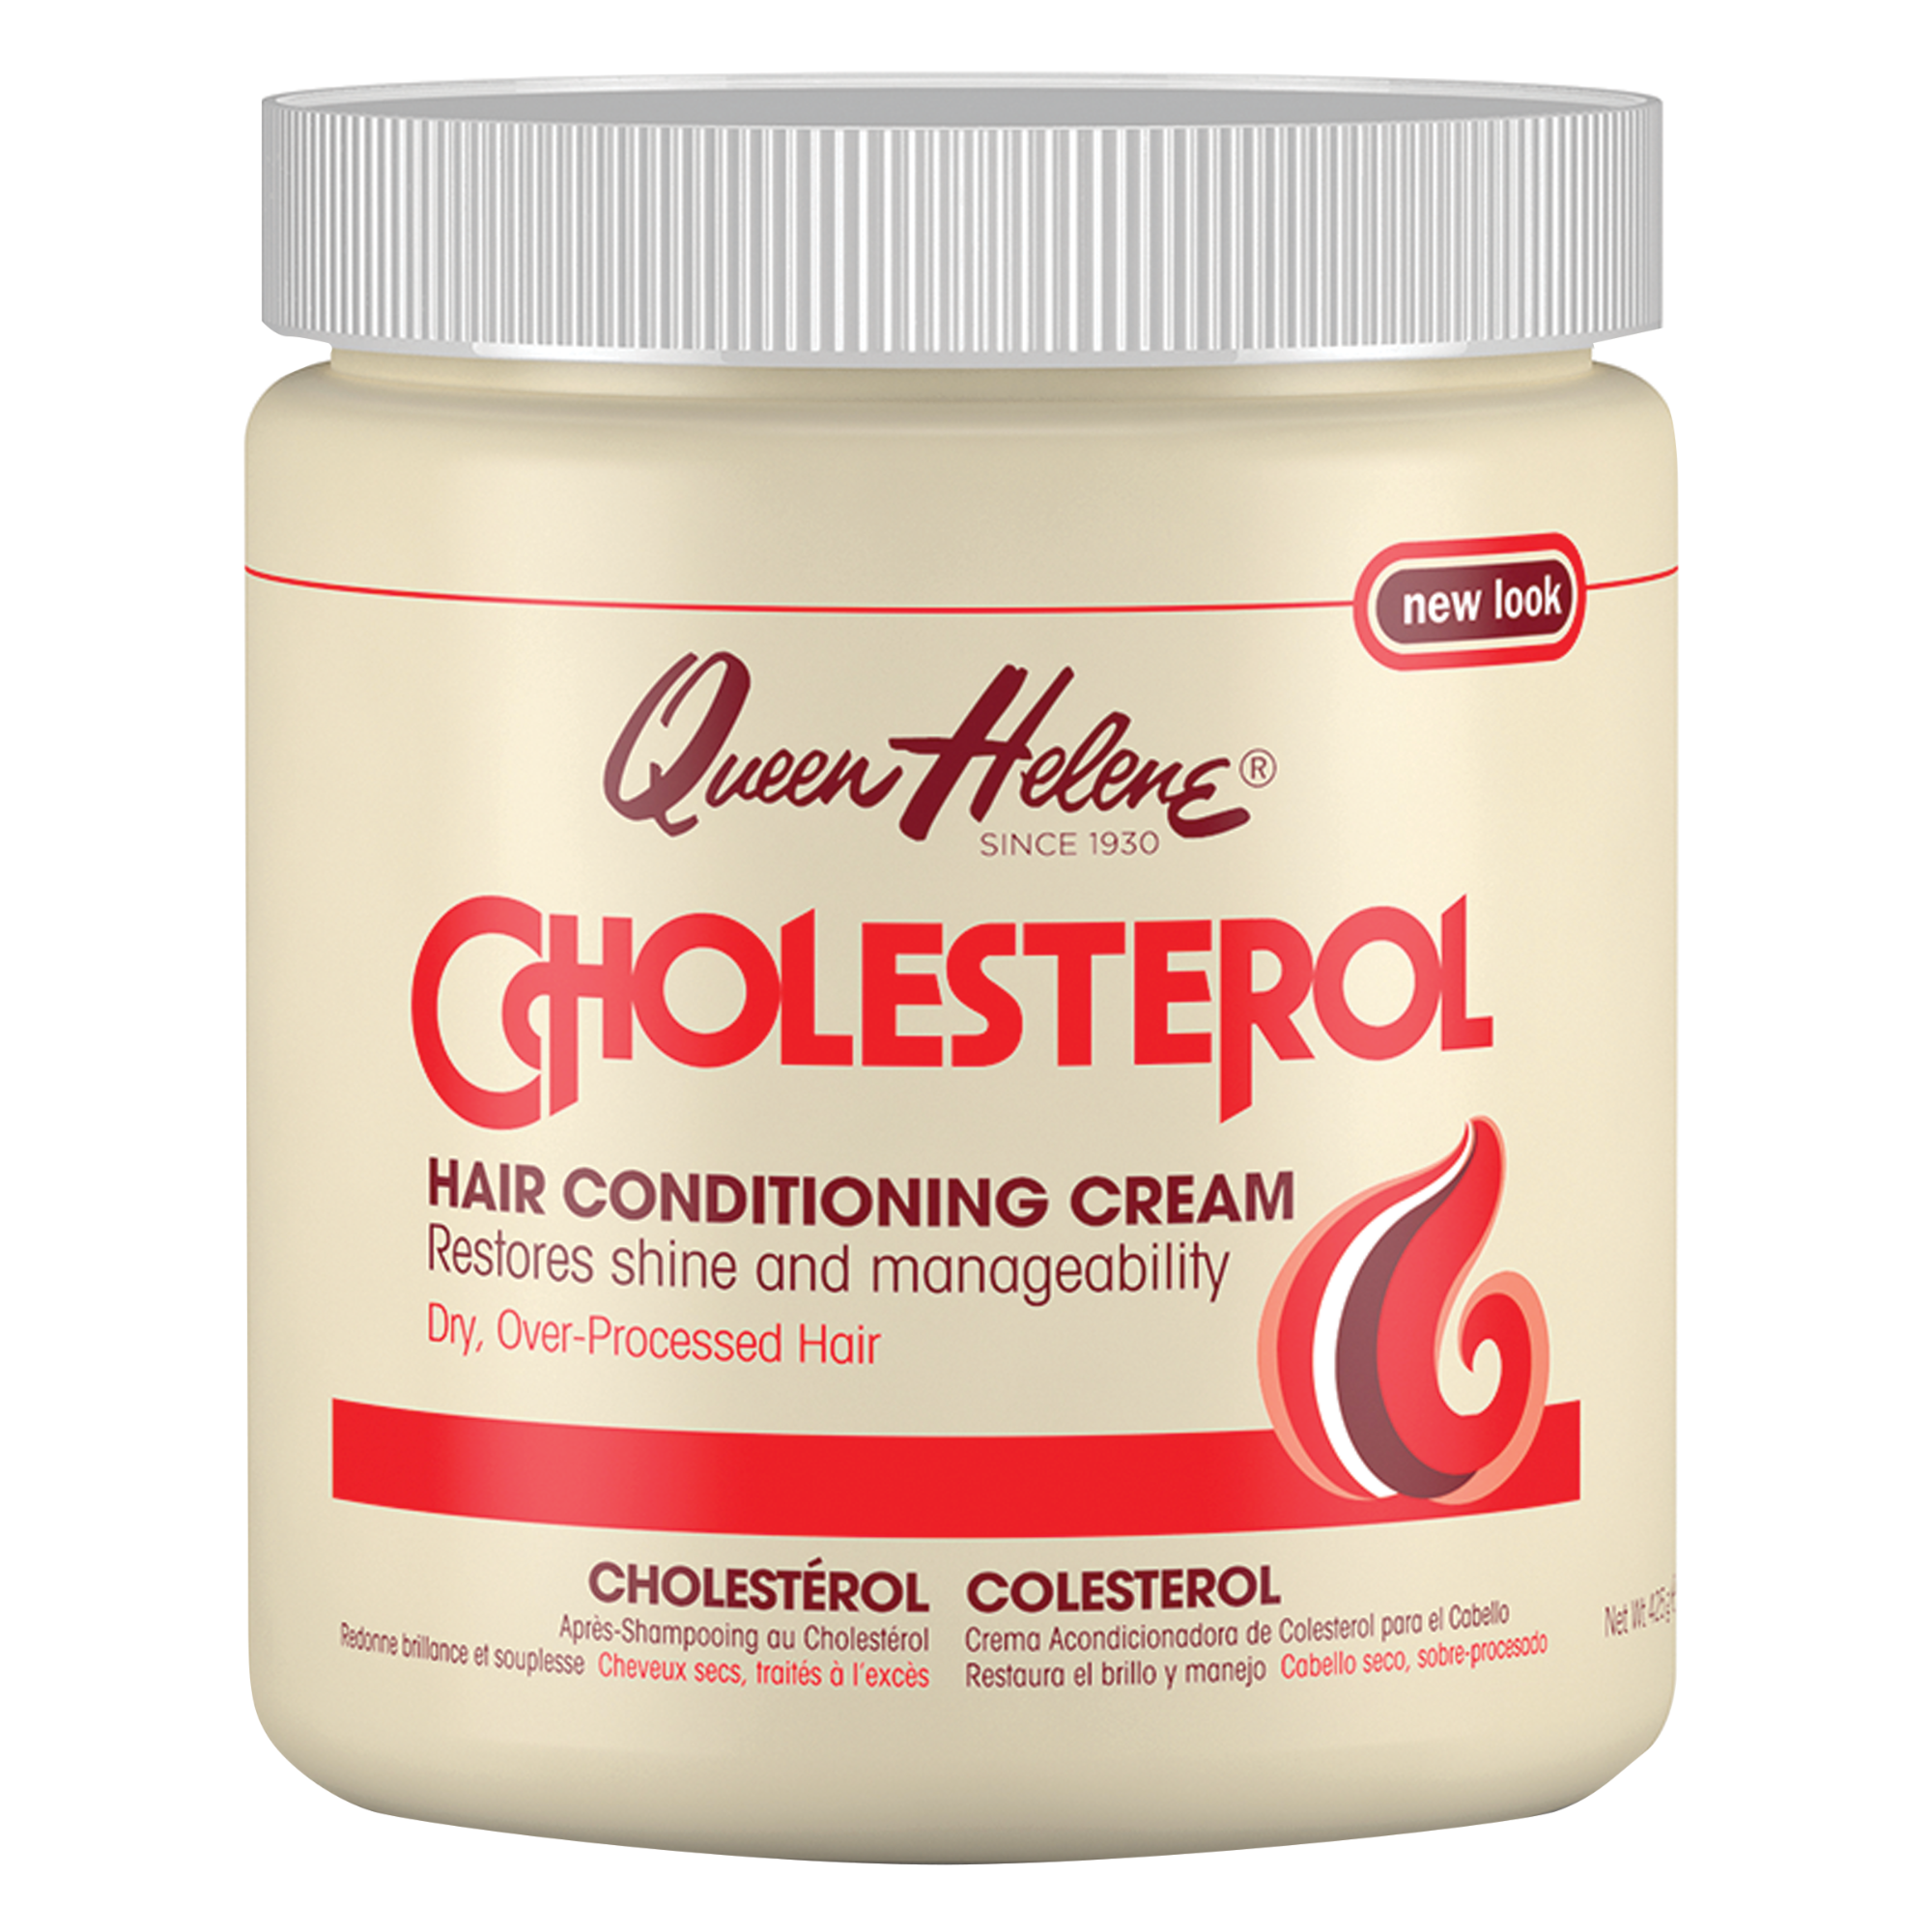 Cholesterol Hair Conditioning Cream - 15 oz.